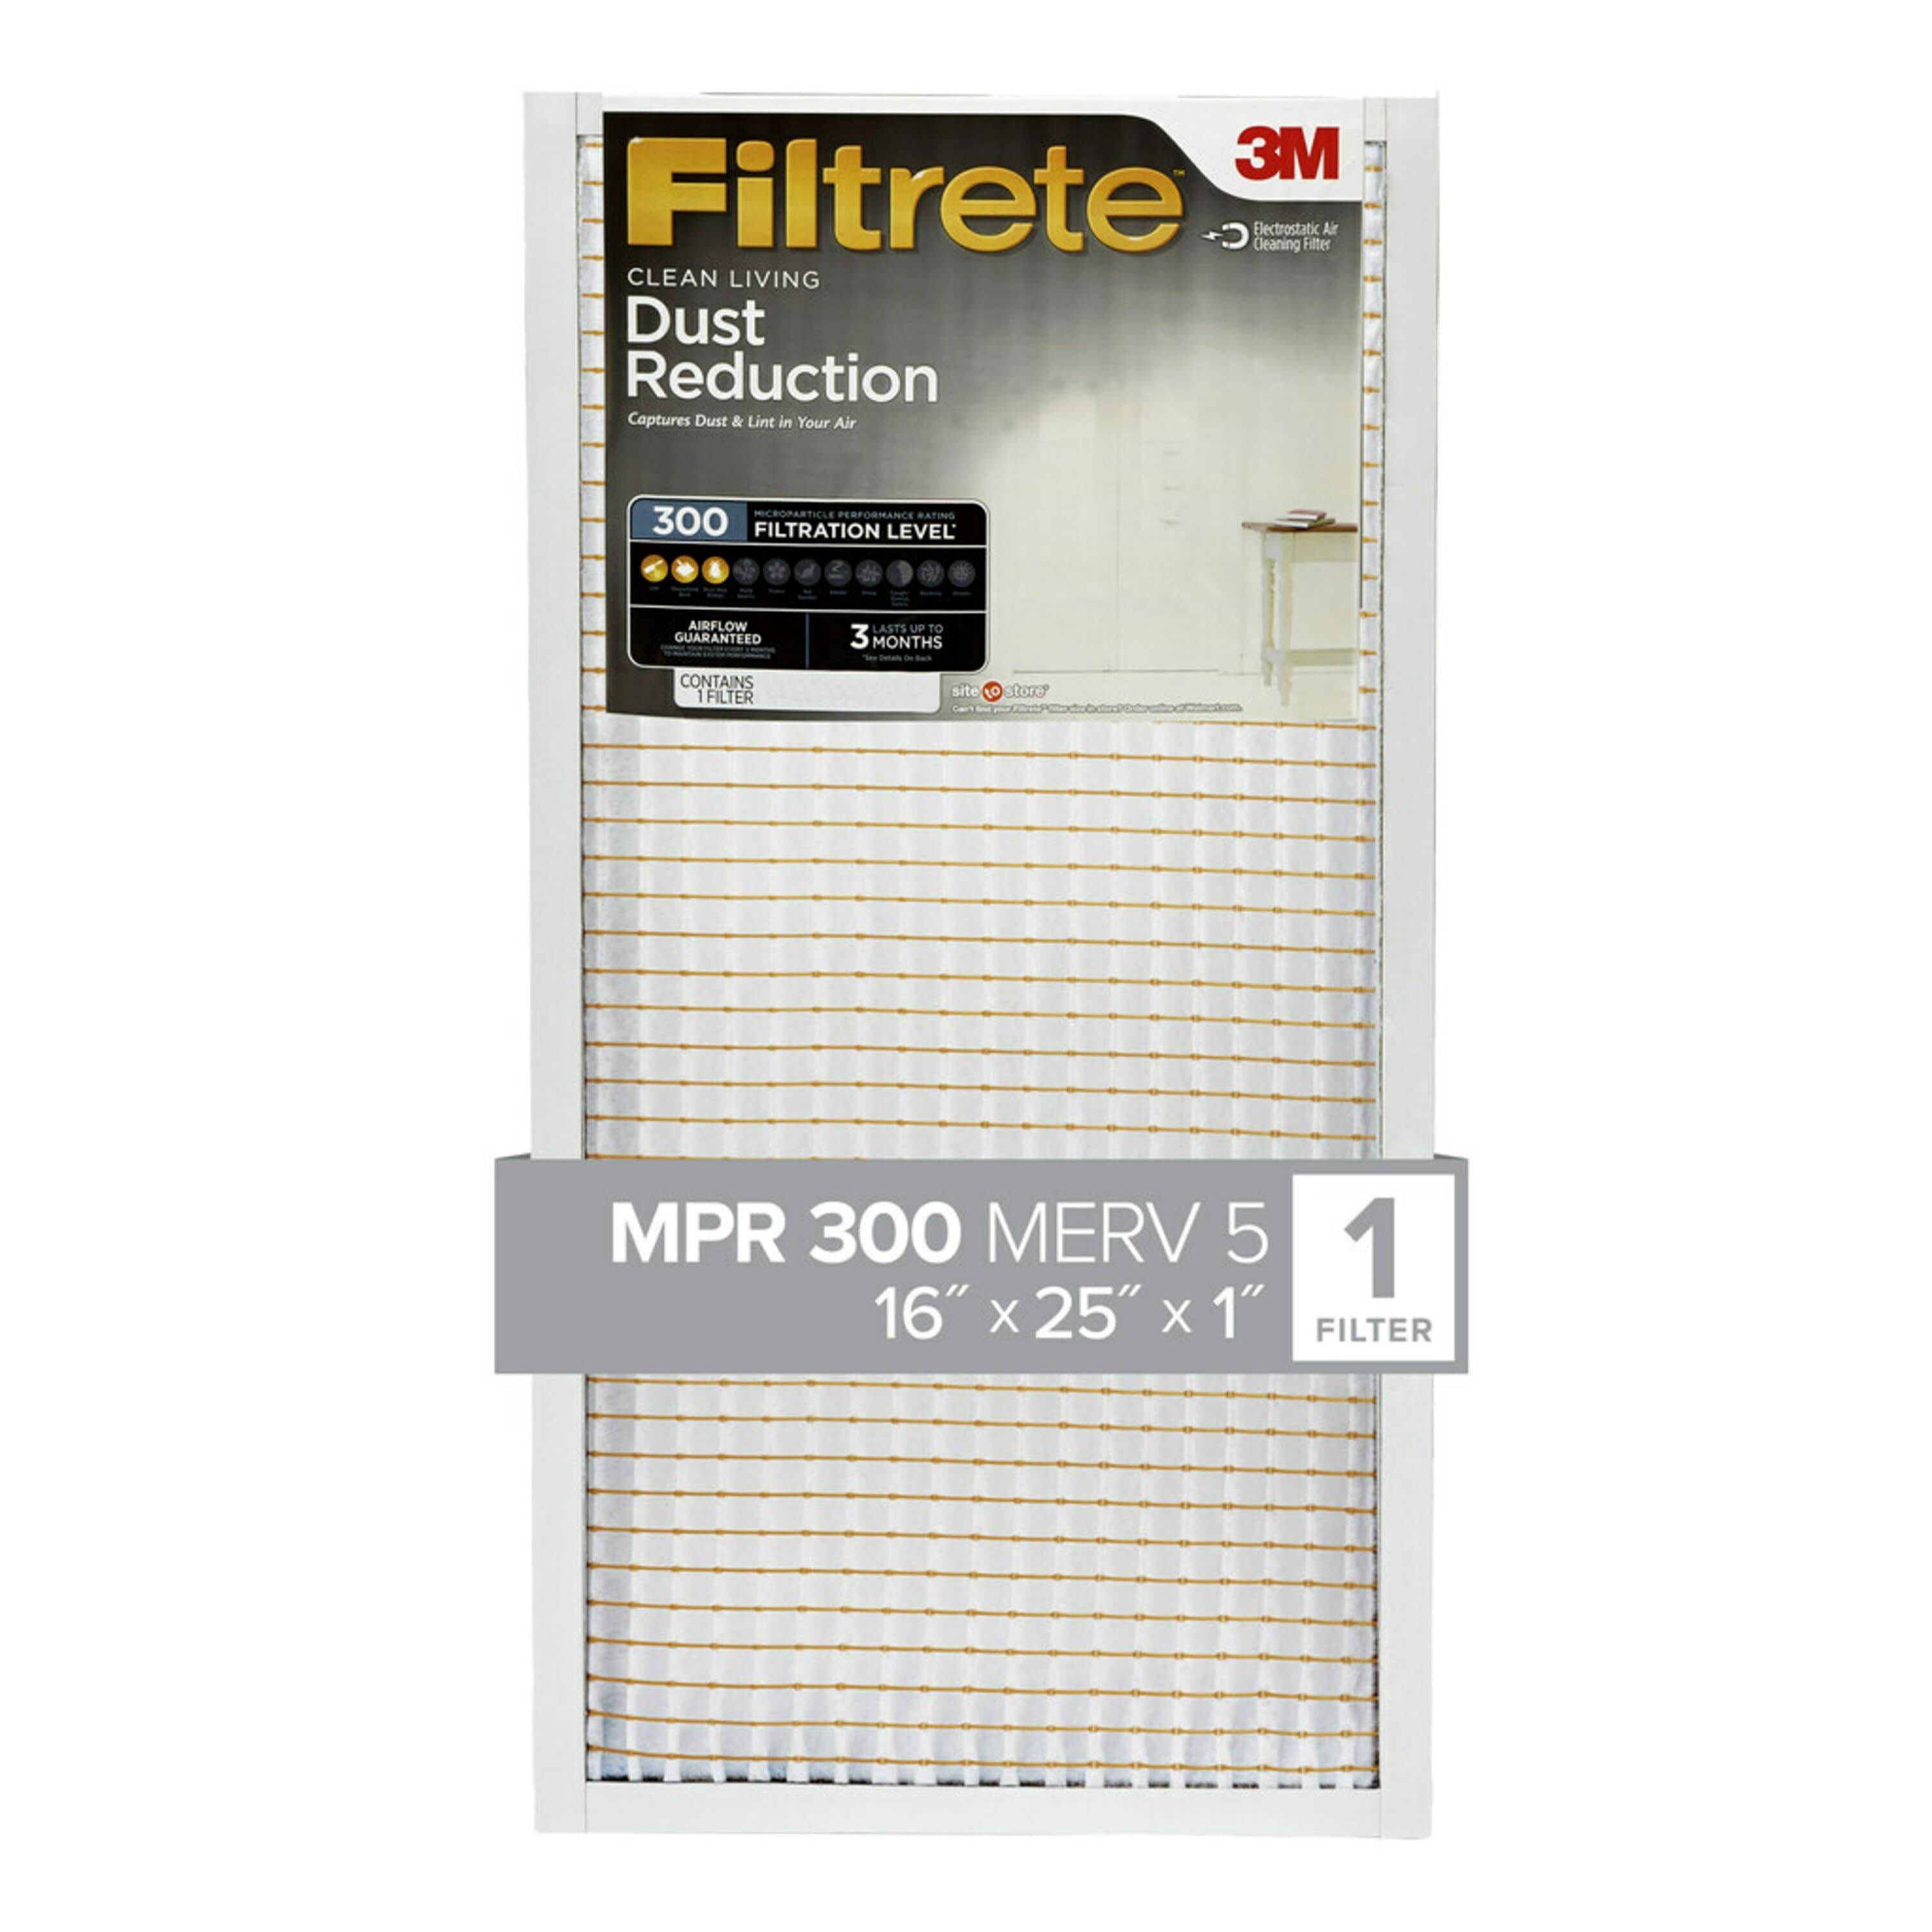 Filtrete 16x25x1, MERV 5, Dust Reduction HVAC Furnace Air Filter, 300 MPR, 1 Filter